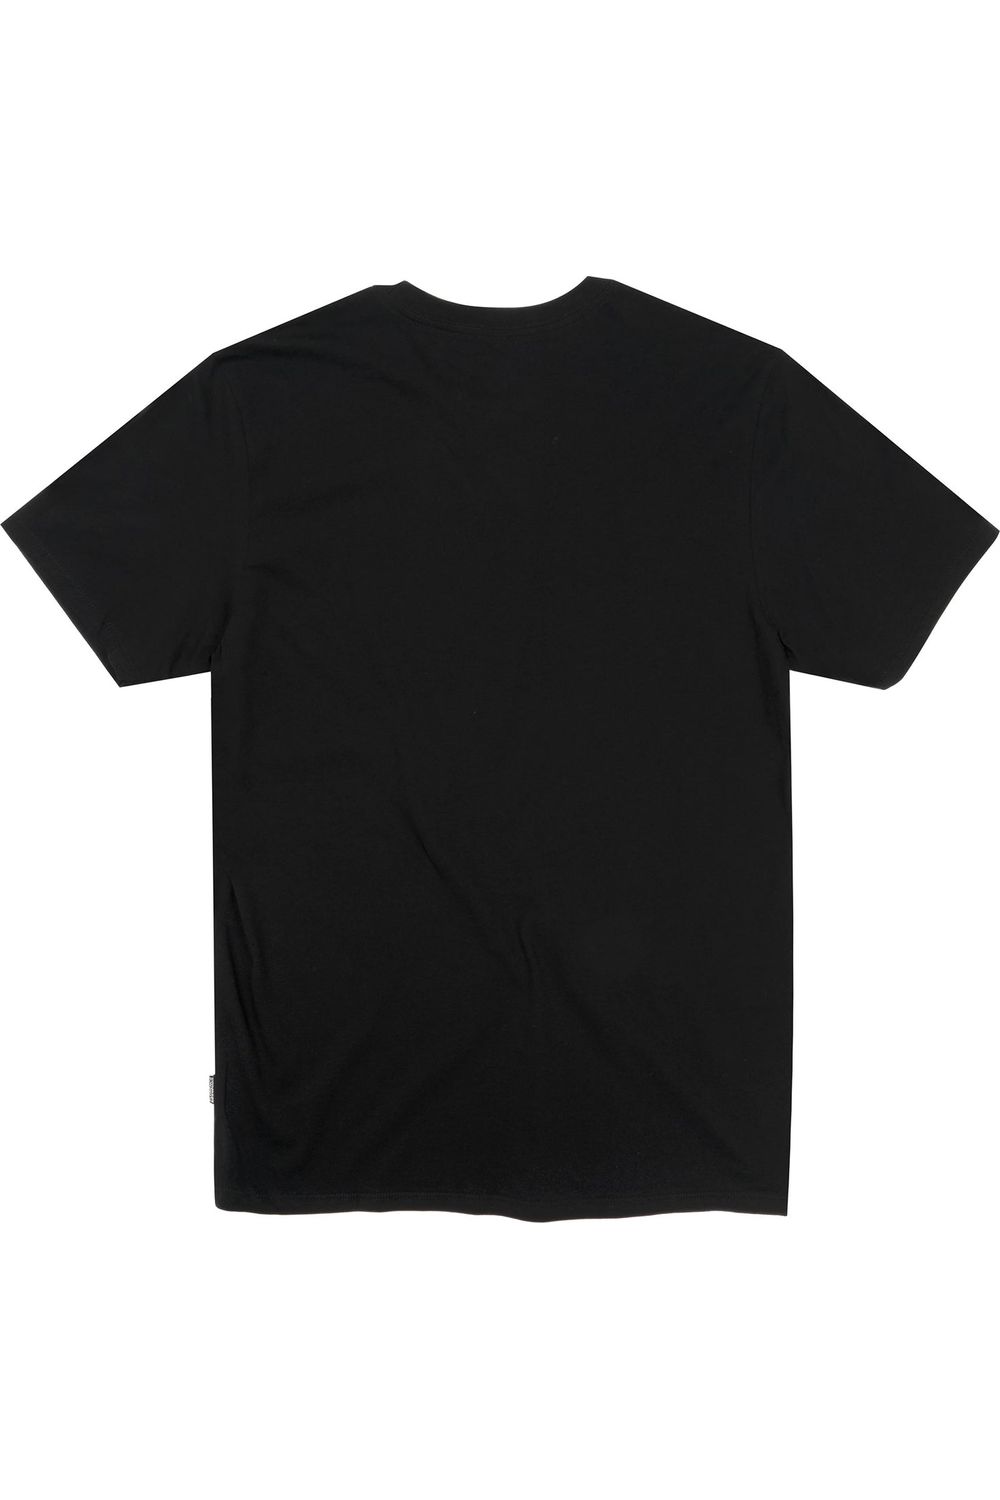 Florence Marine X Logo Island Chain T-Shirt Black